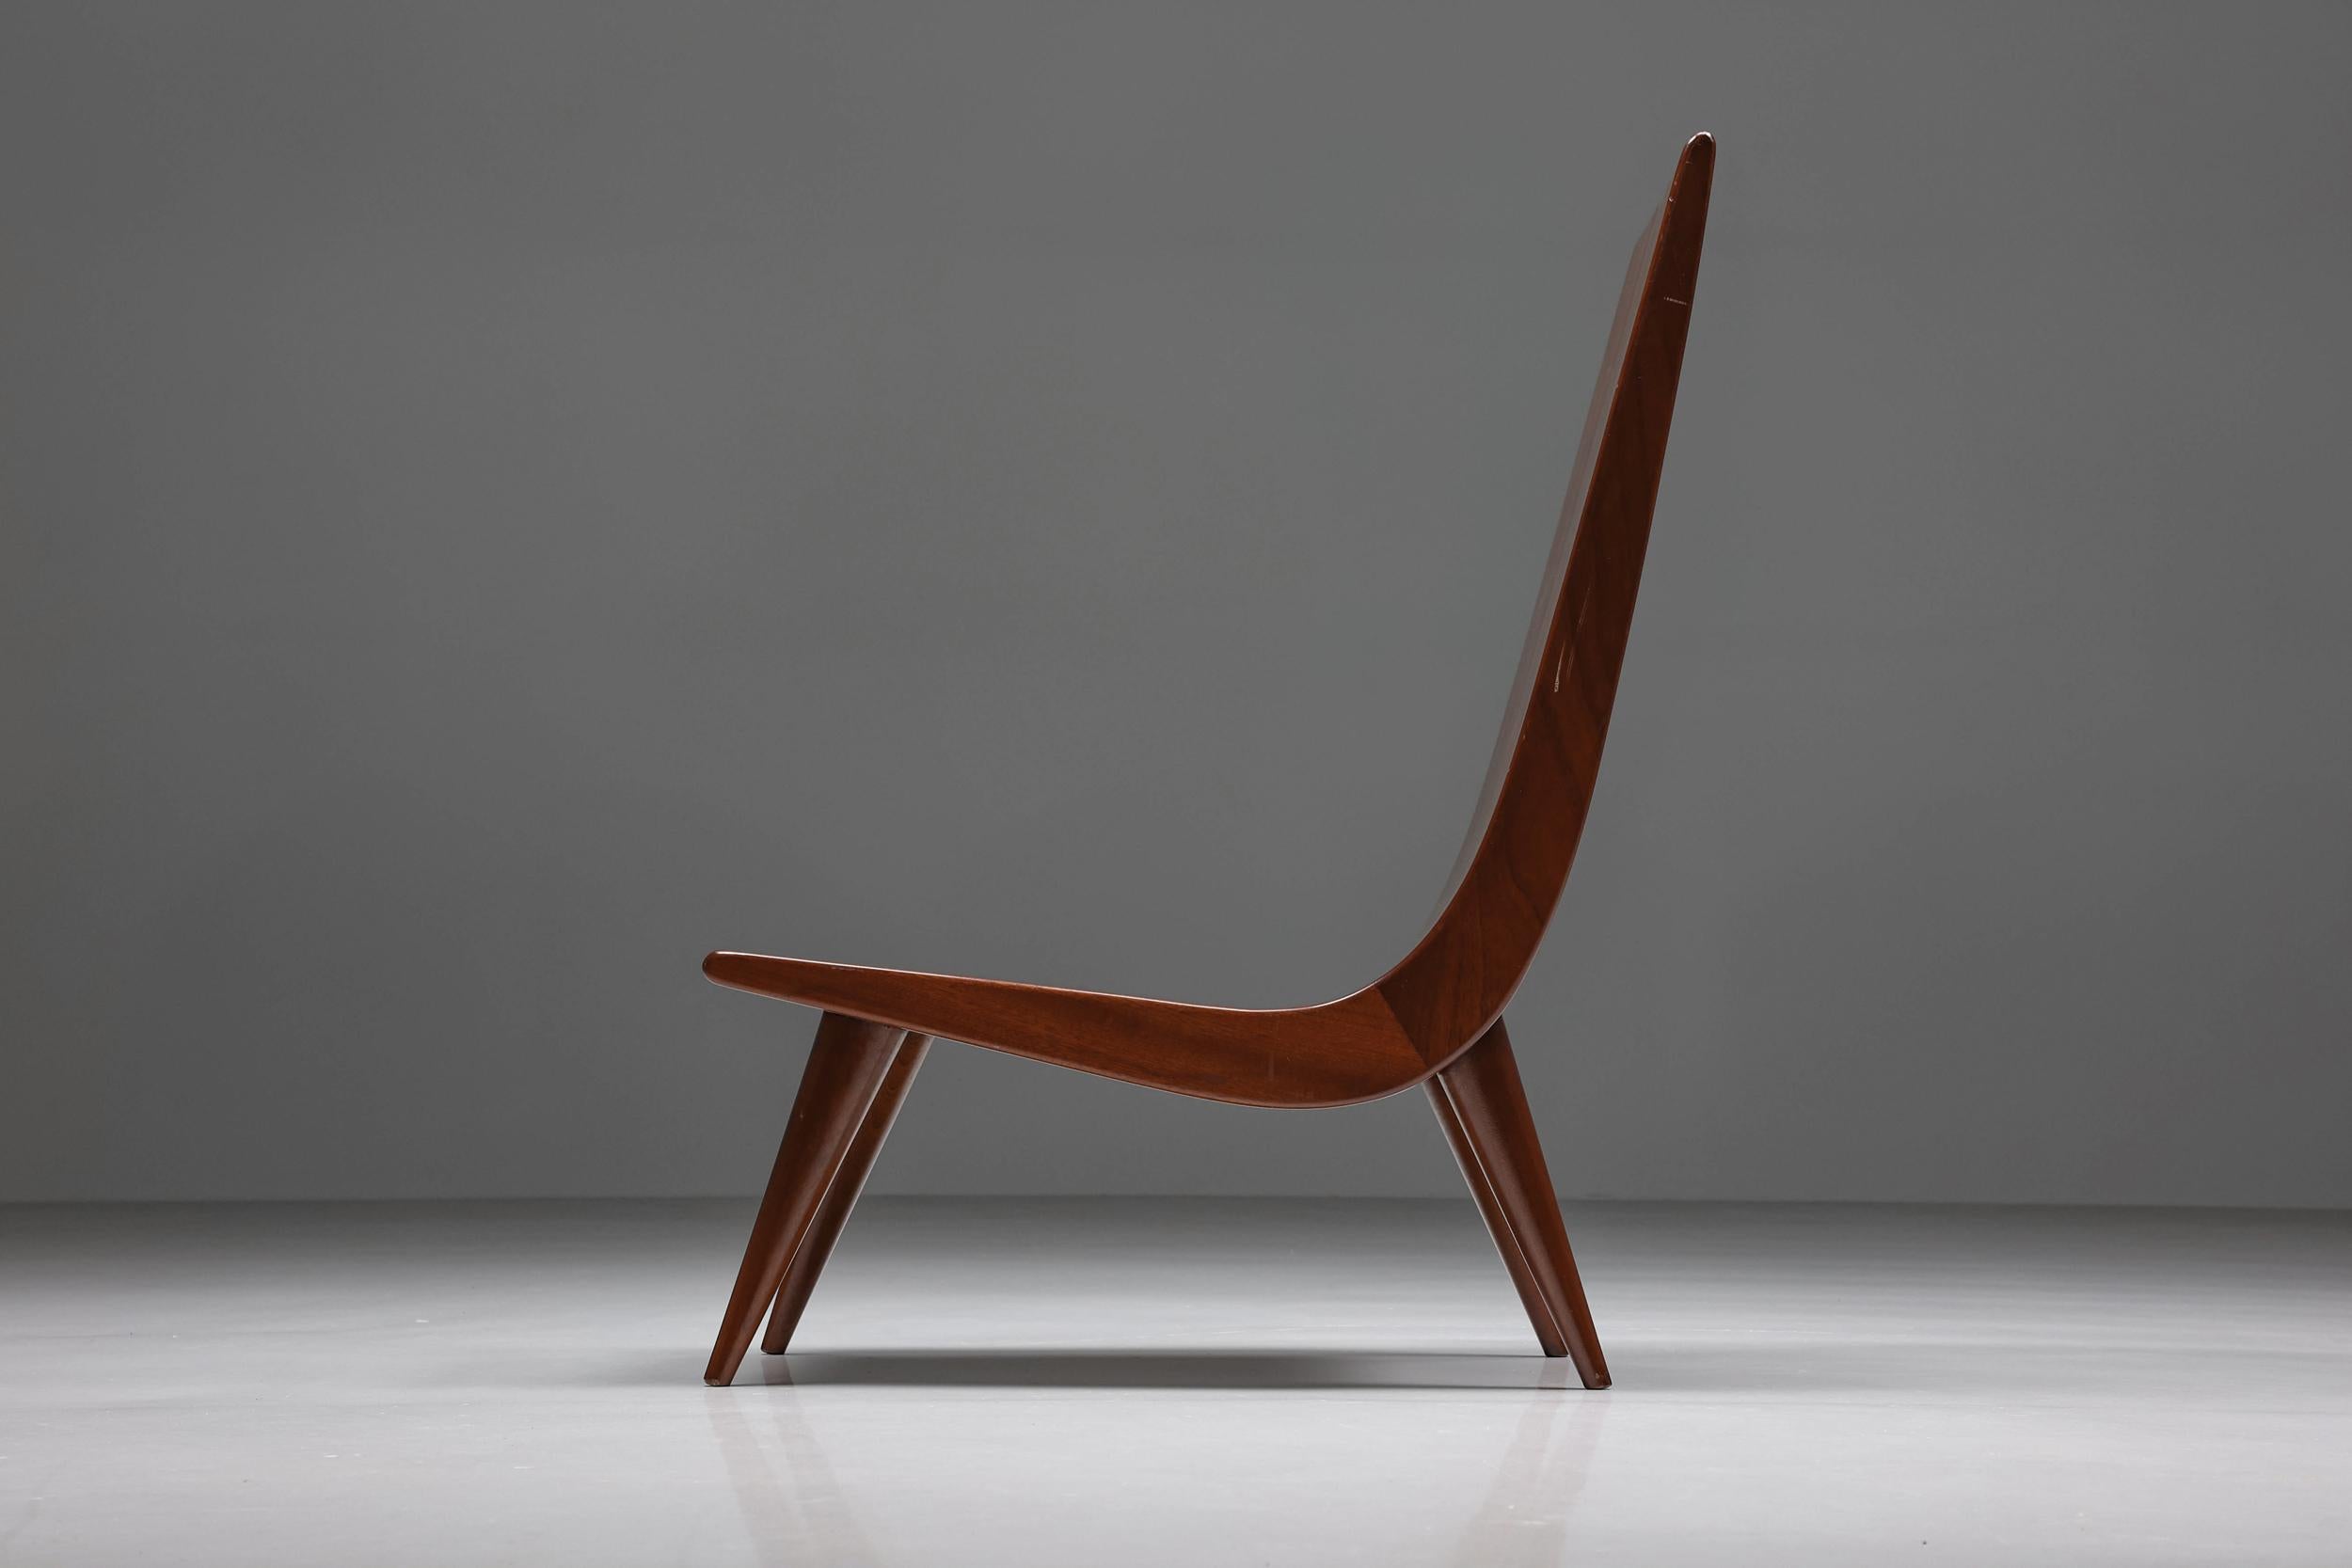 20th Century Brazilian Mid-Century Modern Lounge Chair in Walnut, Caldas, Niemayer Insp, 1970